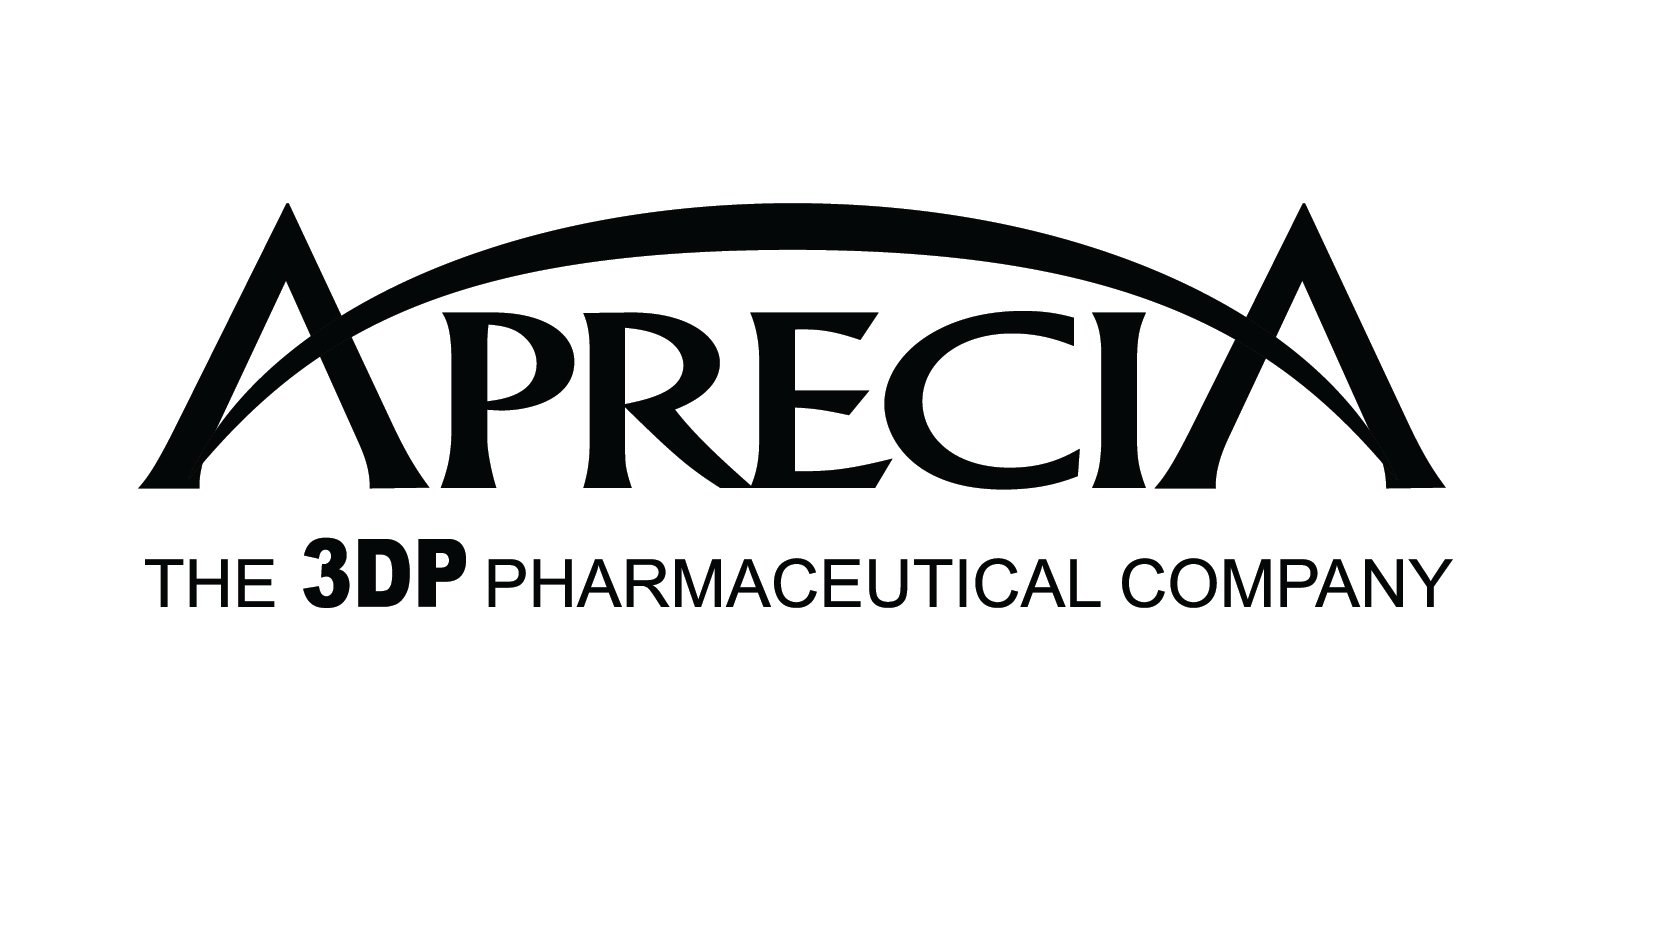  APRECIA THE 3DP PHARMACEUTICAL COMPANY